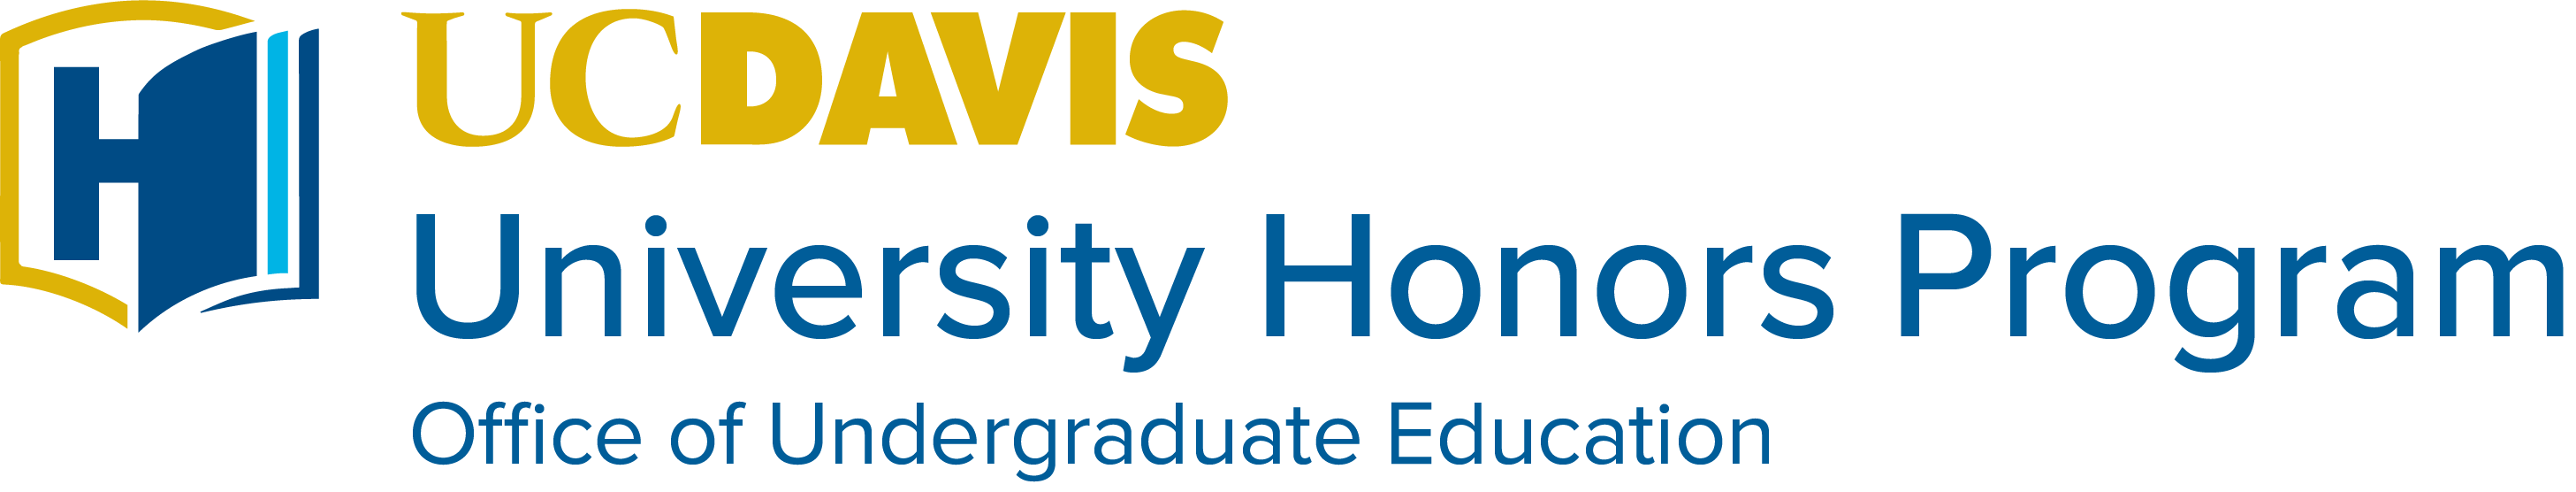 UC Davis University Honors Program Logo